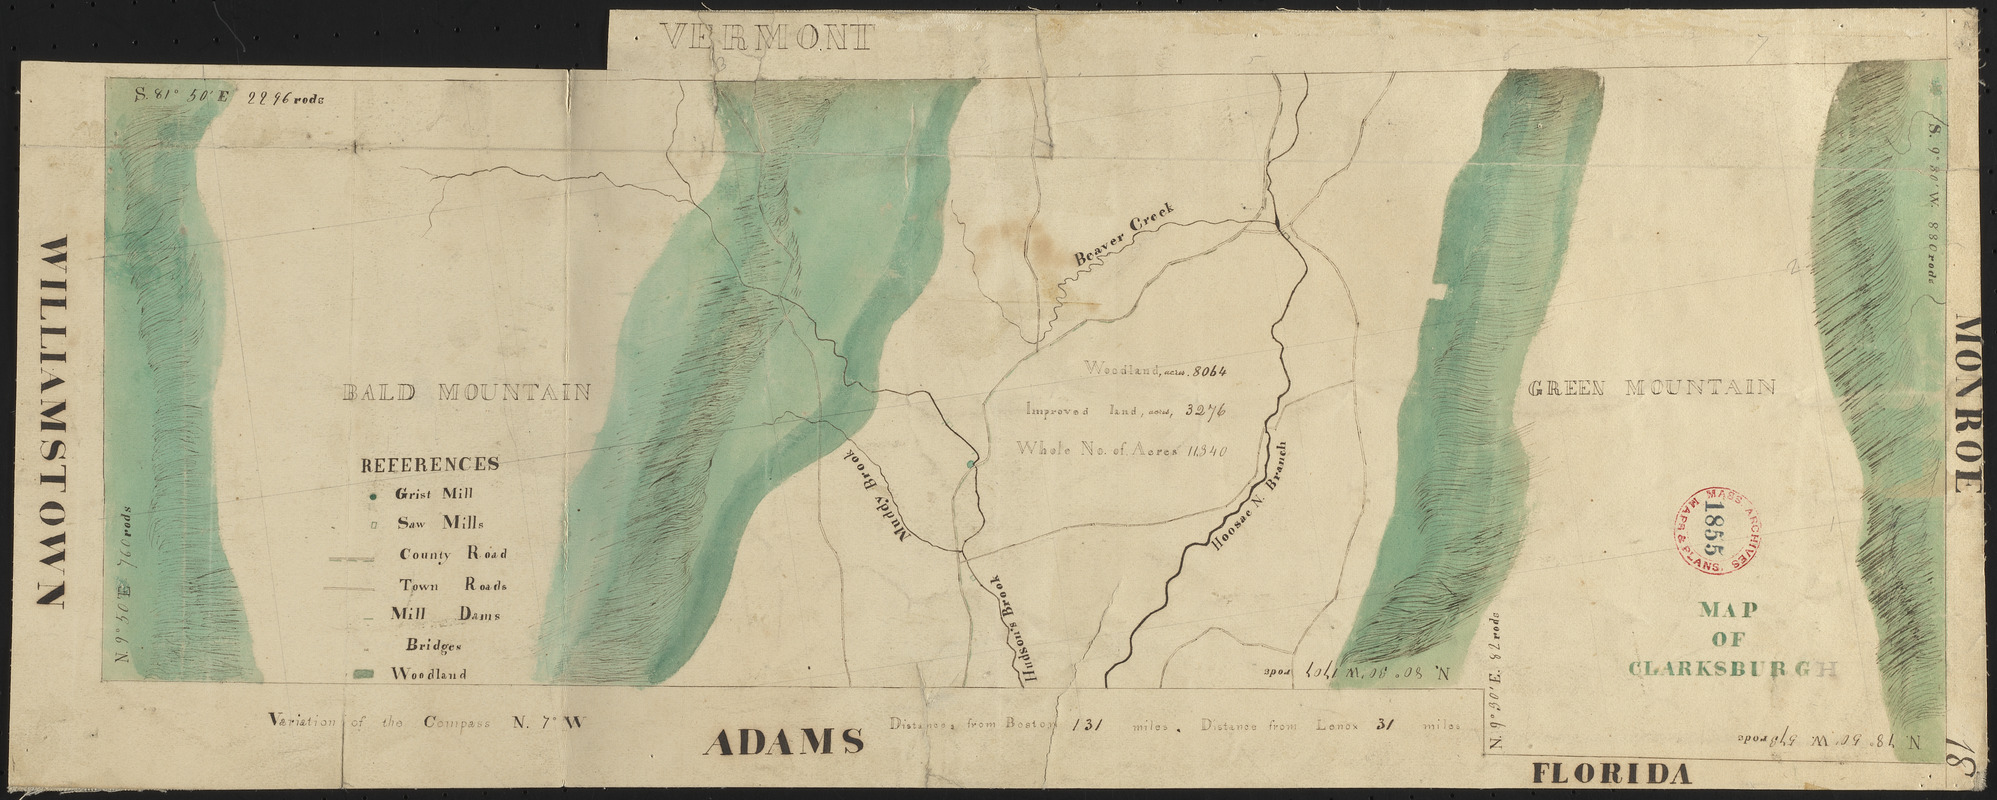 Plan of Clarksburg, surveyor's name not given, dated 1830